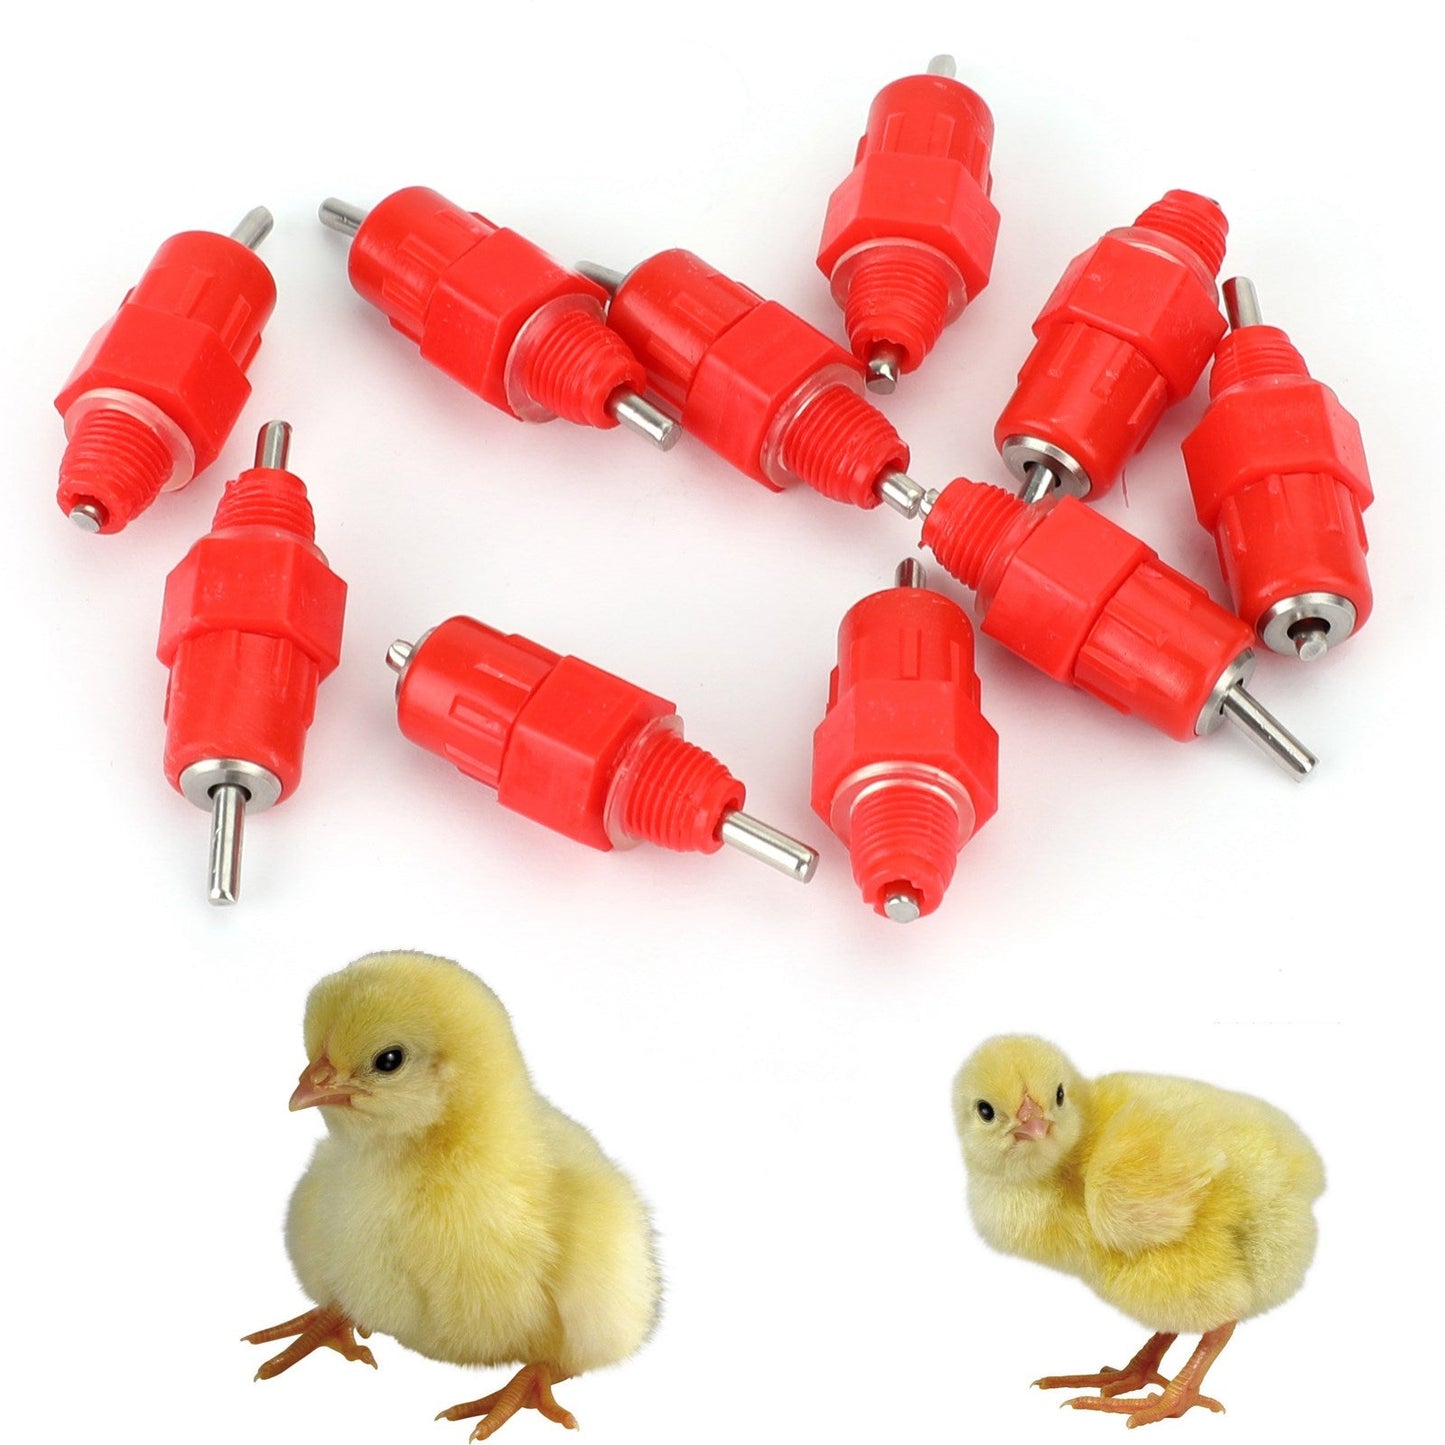 10 Pcs Water Nipple Valves Auto Drinker Waterer Feeder Poultry Chicken Duck Bird